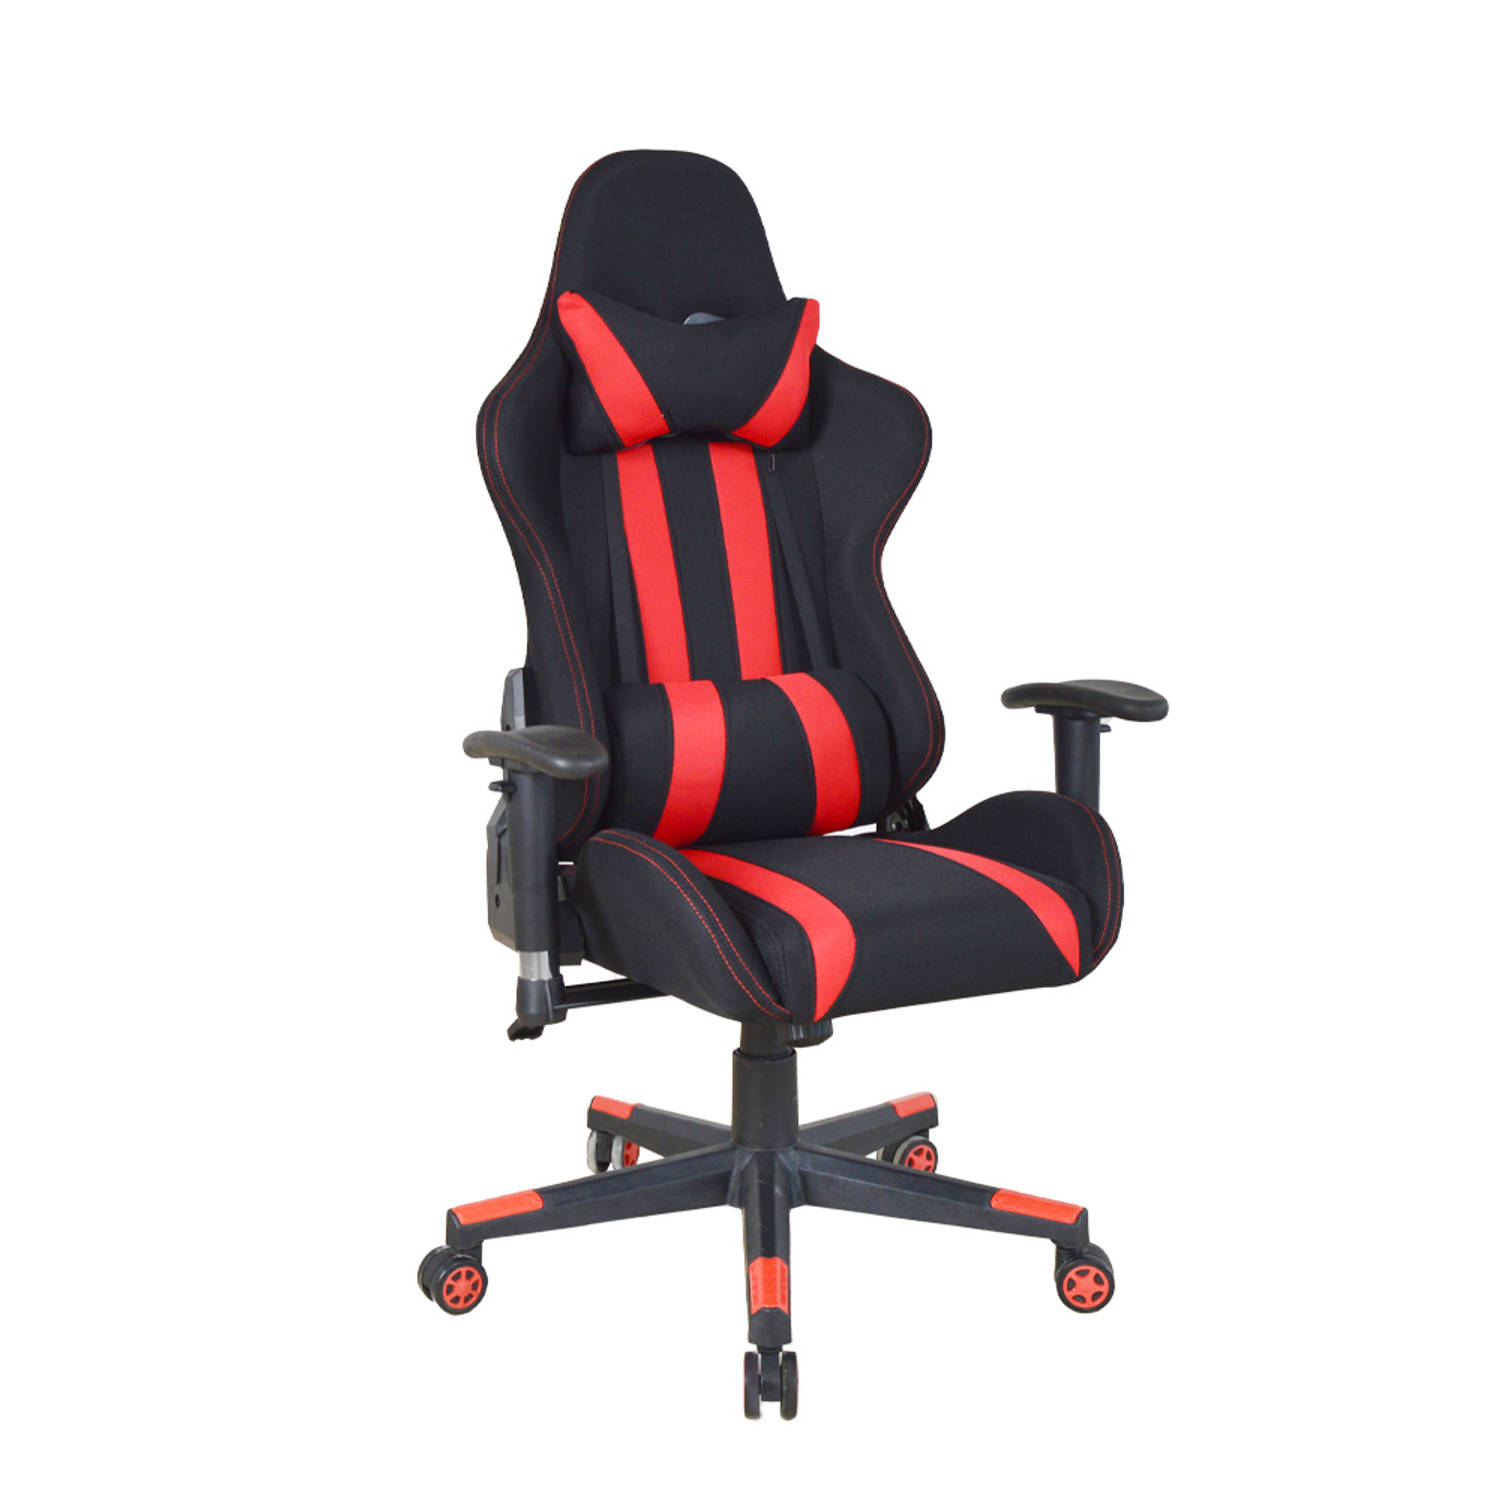 omhelzing Dislocatie streng Bureaustoel gamestoel Thomas - racing gaming stijl - stof bekleding - zwart  rood | Blokker